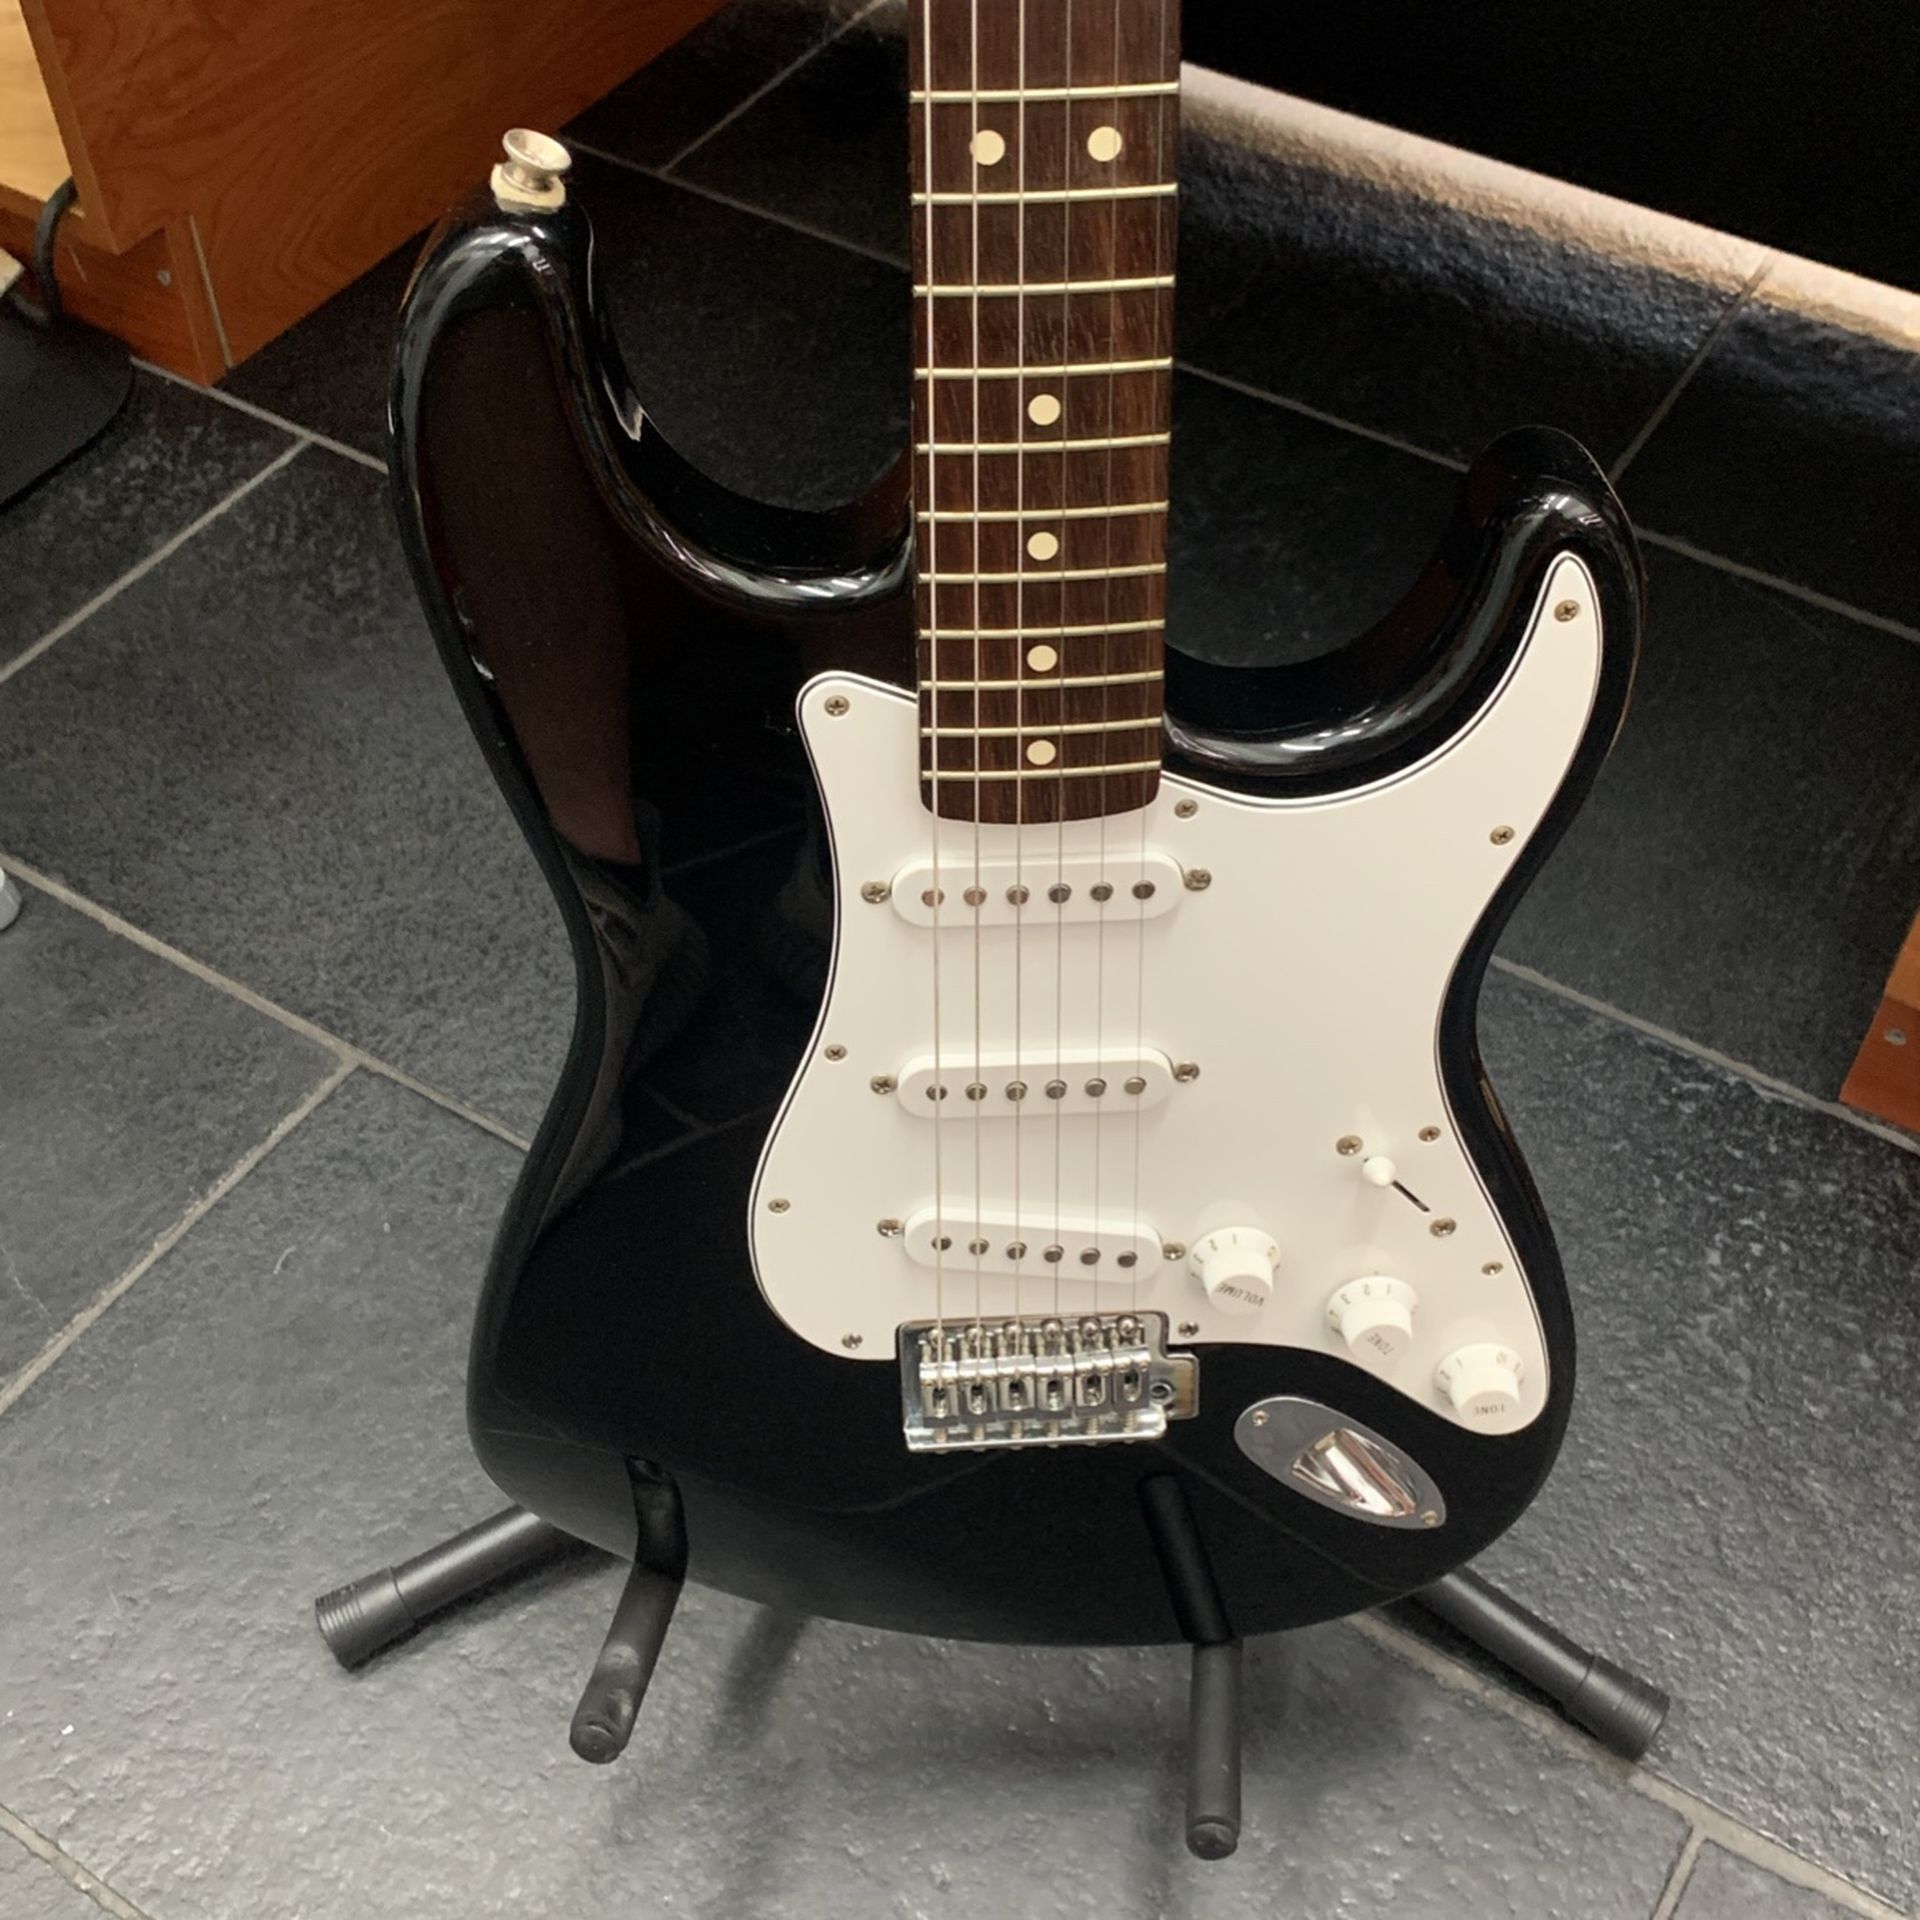 Fender Stratocaster Mexico Electric Guitar Black